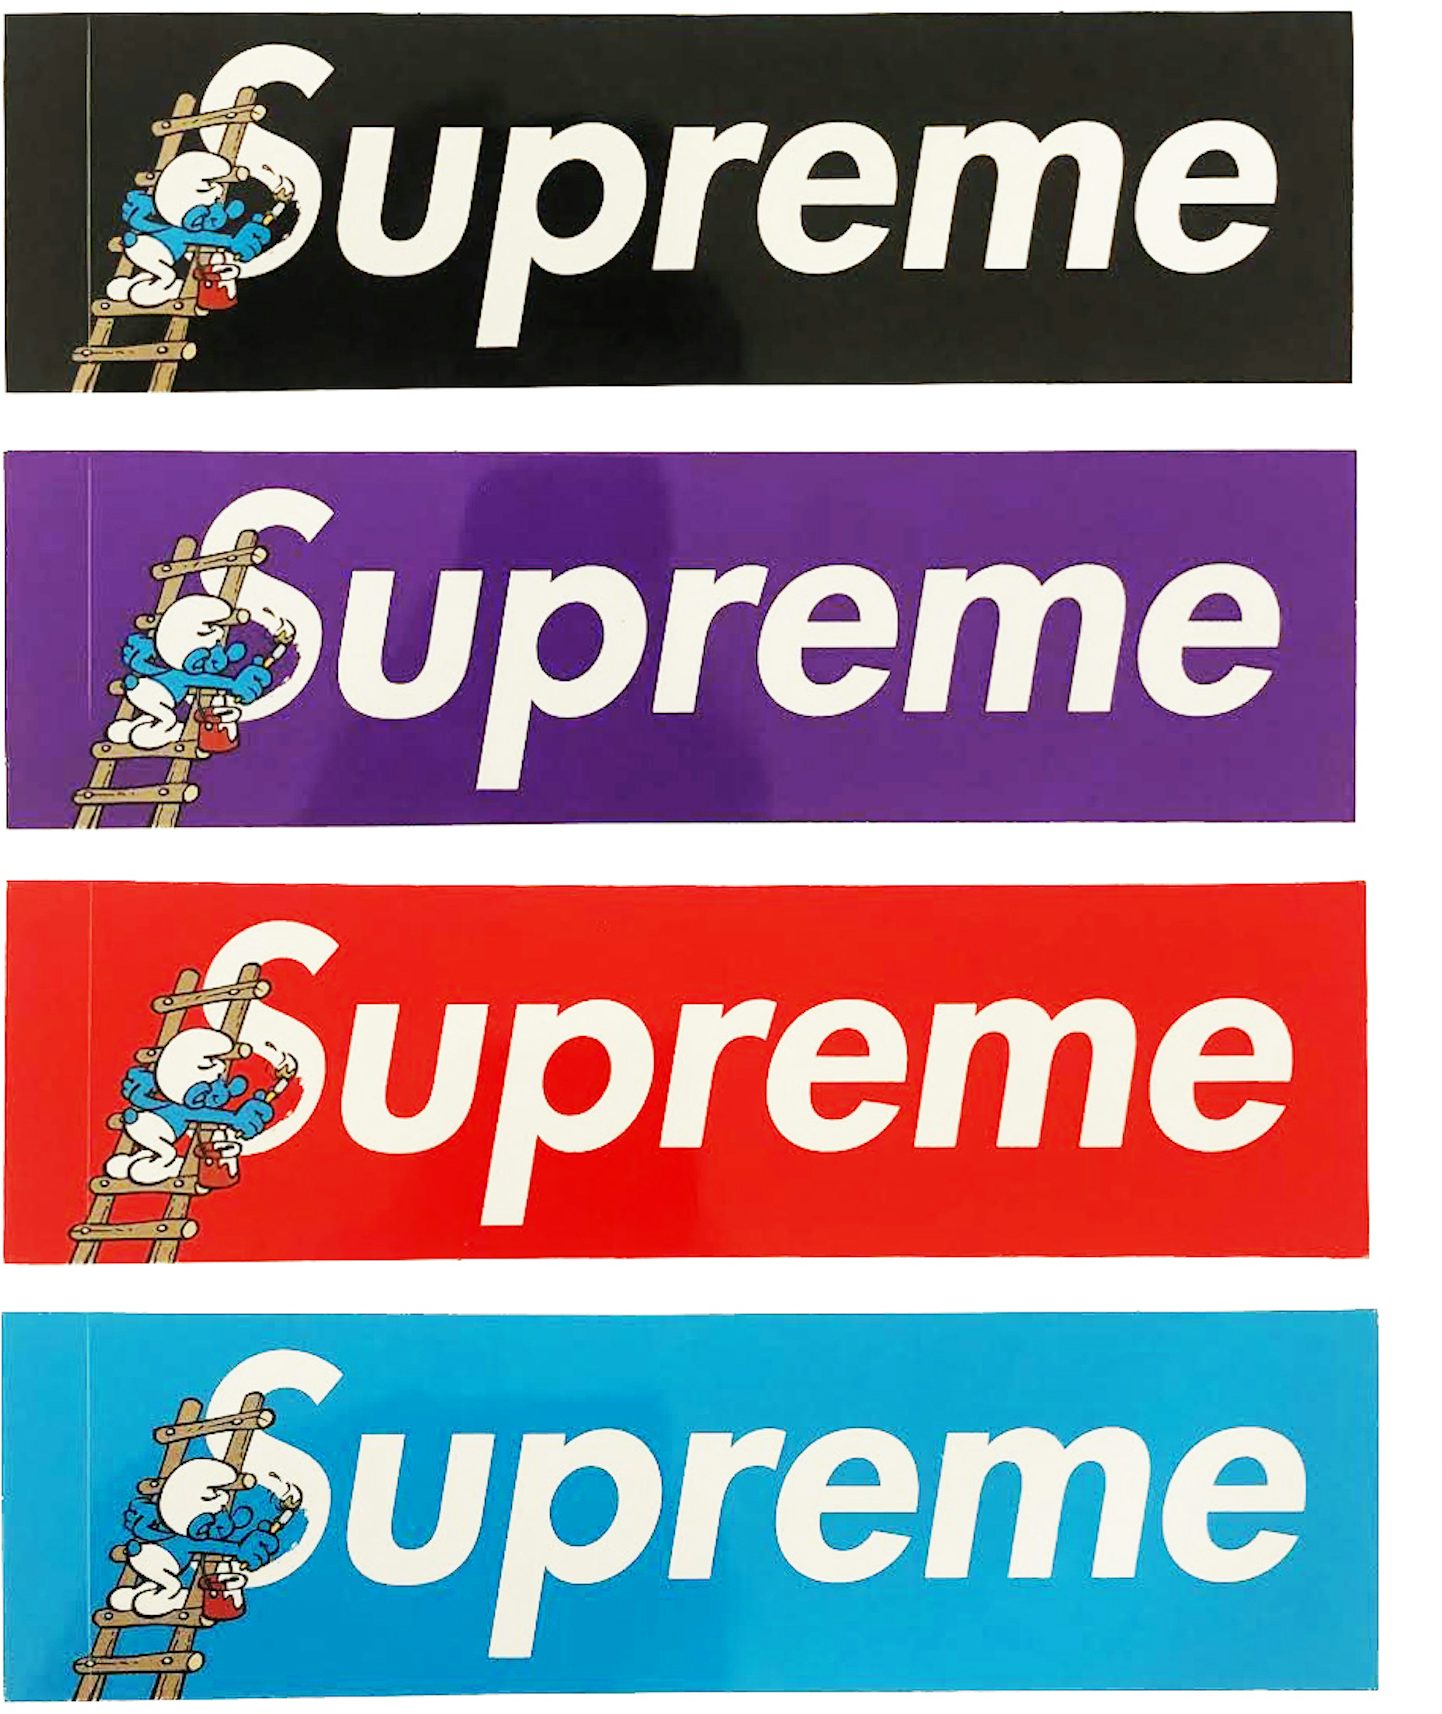 Supreme Sticker